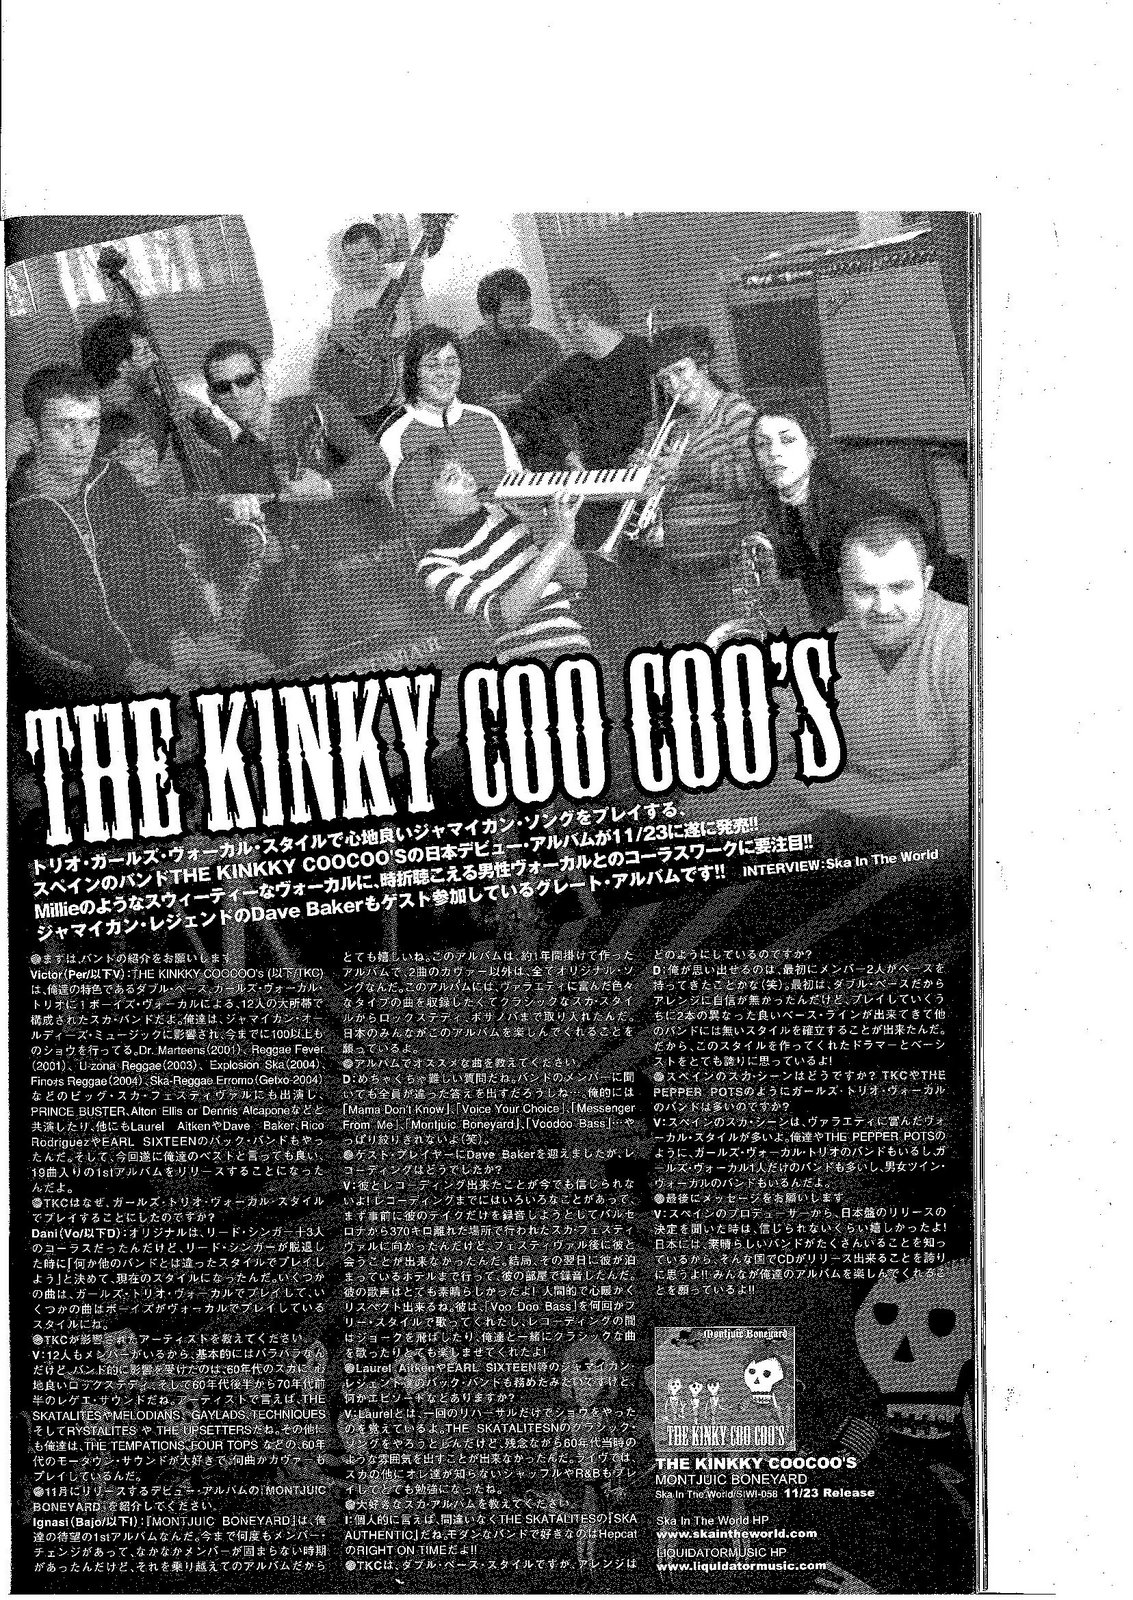 [KINKYS+JAPAN+REVIEW.JPG]